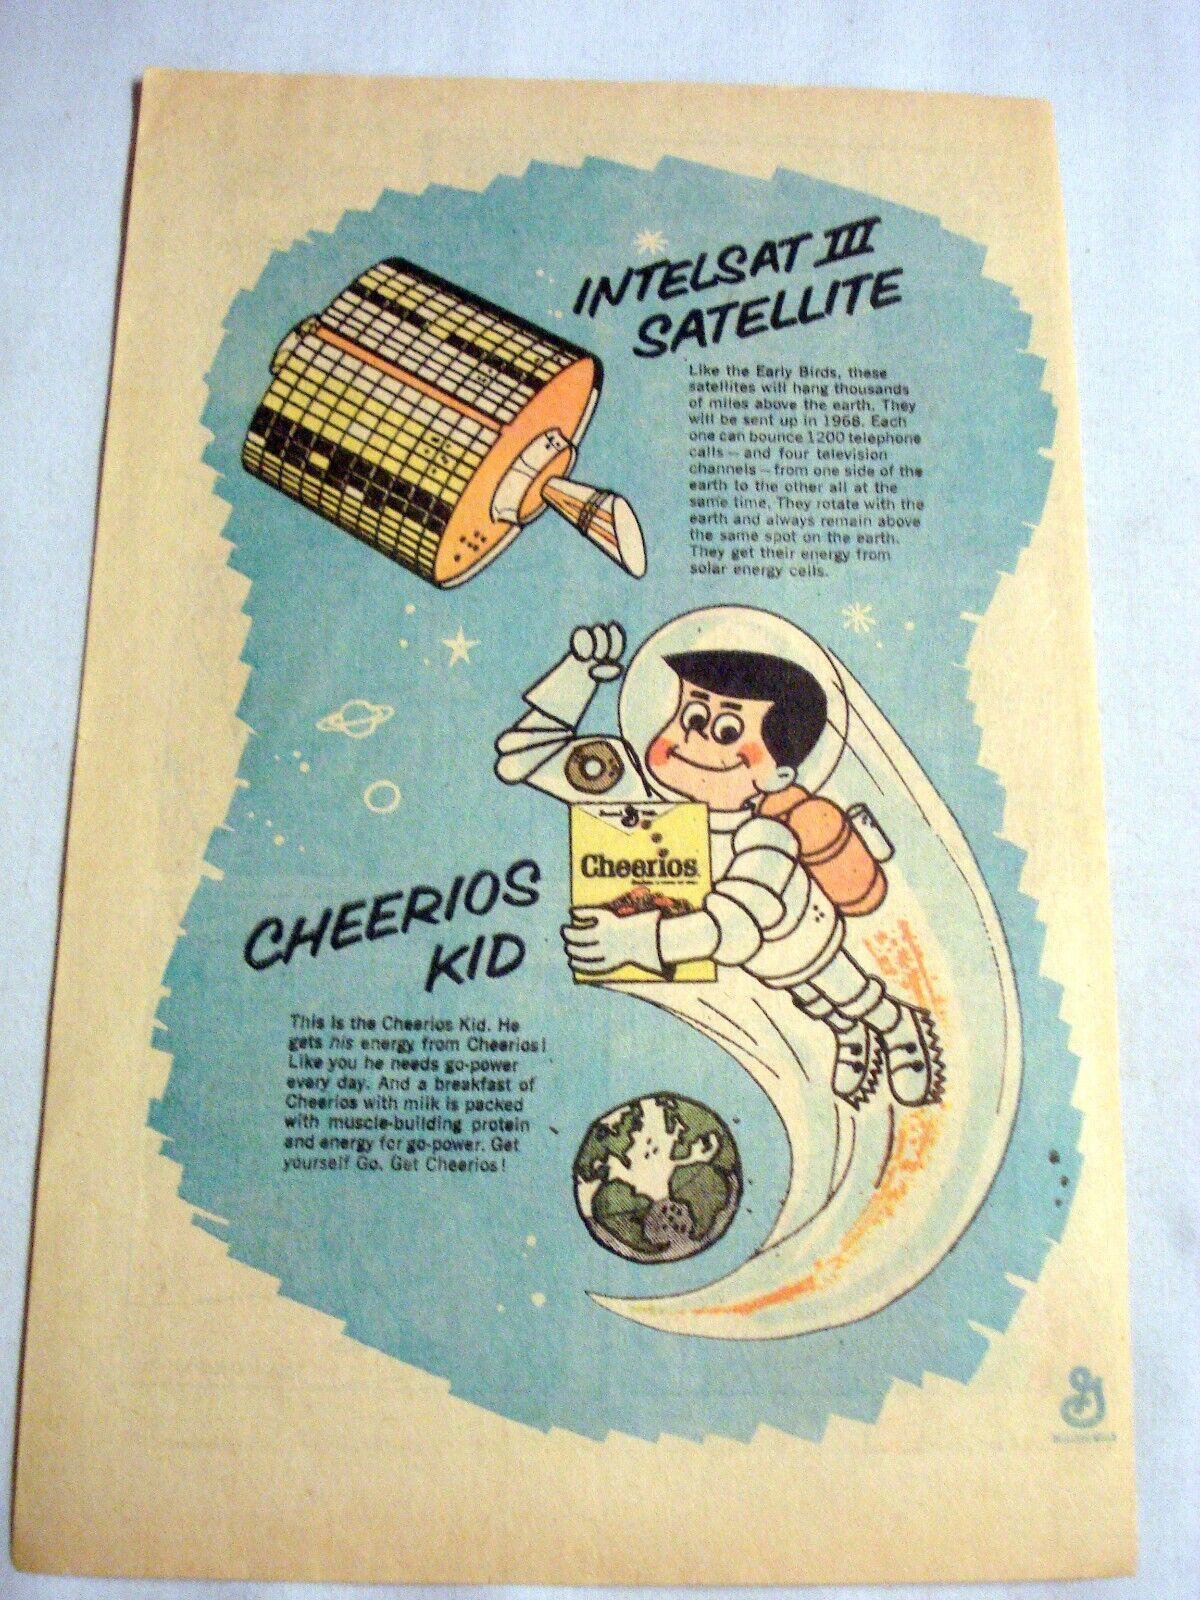 Primary image for 1968 Cheerios Ad Featuring Cheerios Kid & Intelsat III Satellite General Mills